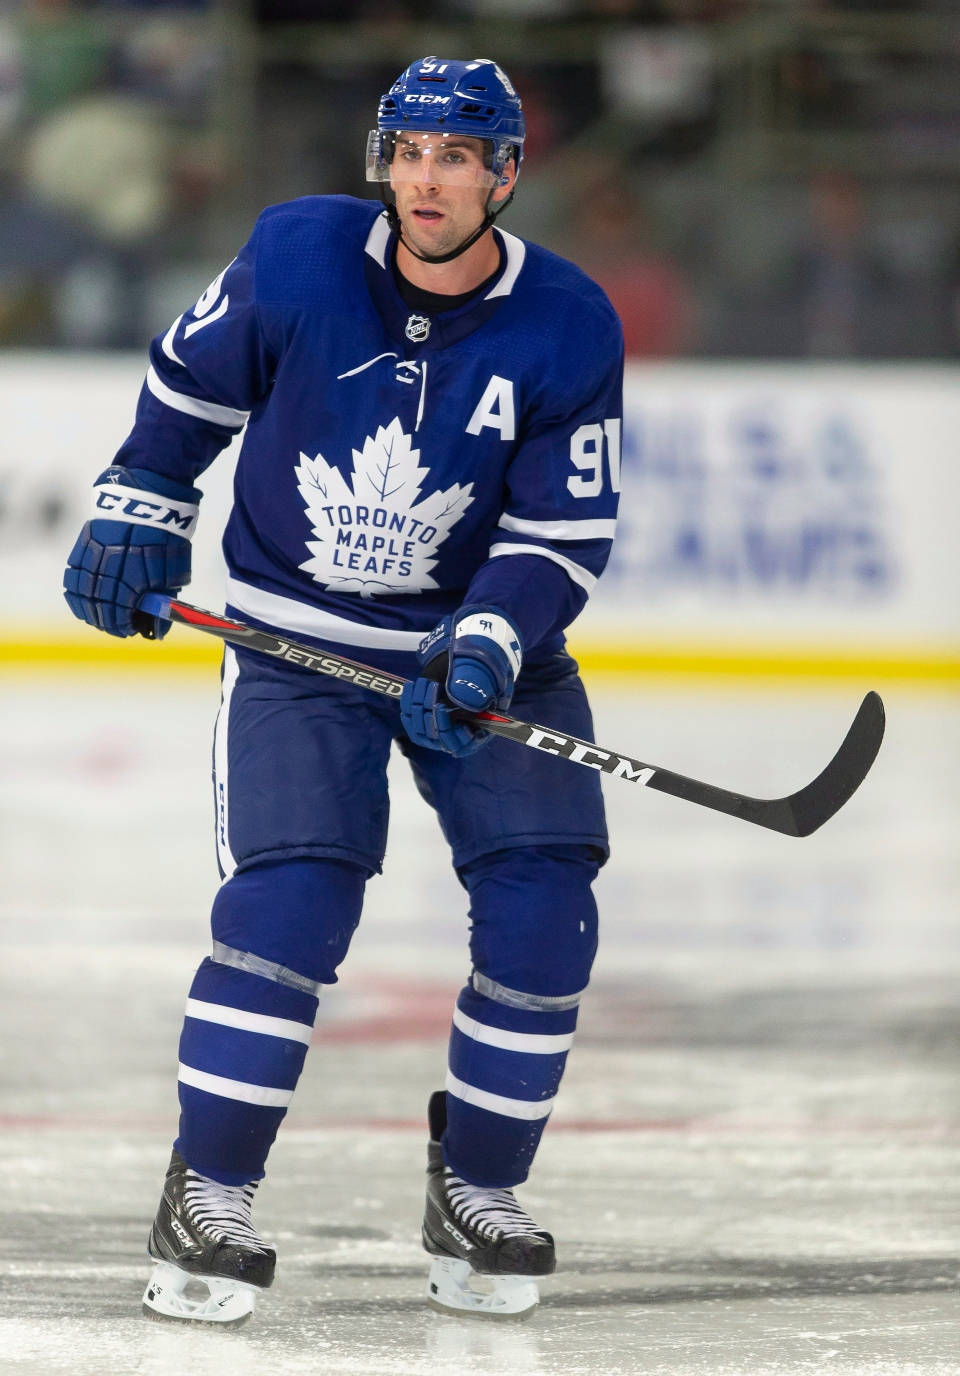 Youth Toronto Maple Leafs John Tavares Blue Home Premier Player